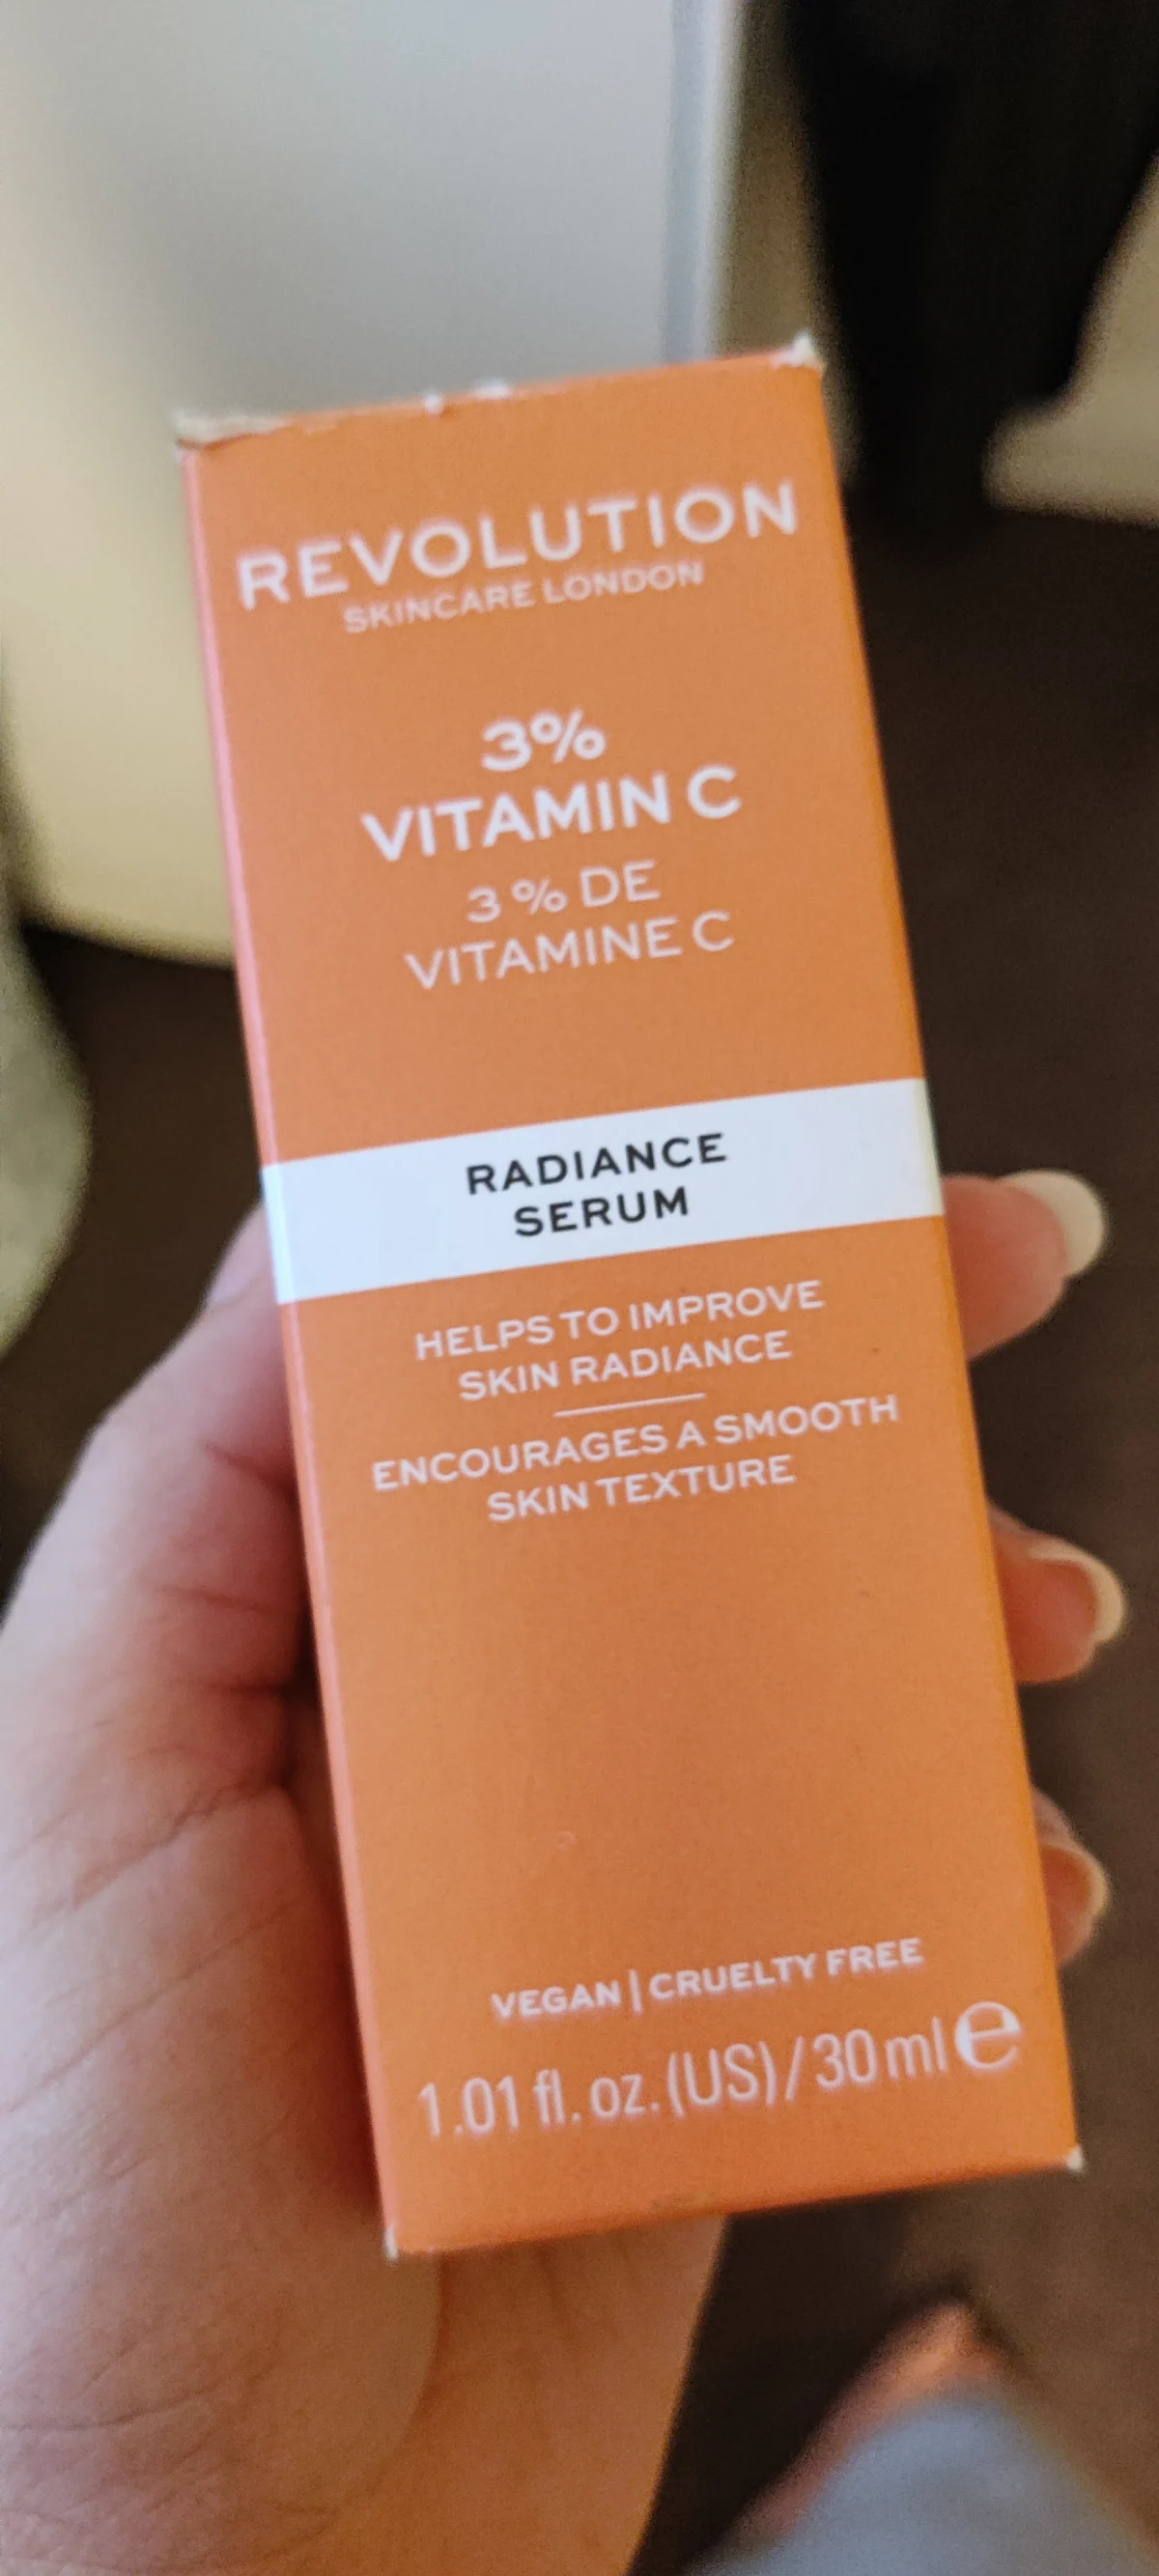 Revolution Skincare 3% Vitamin C - review image